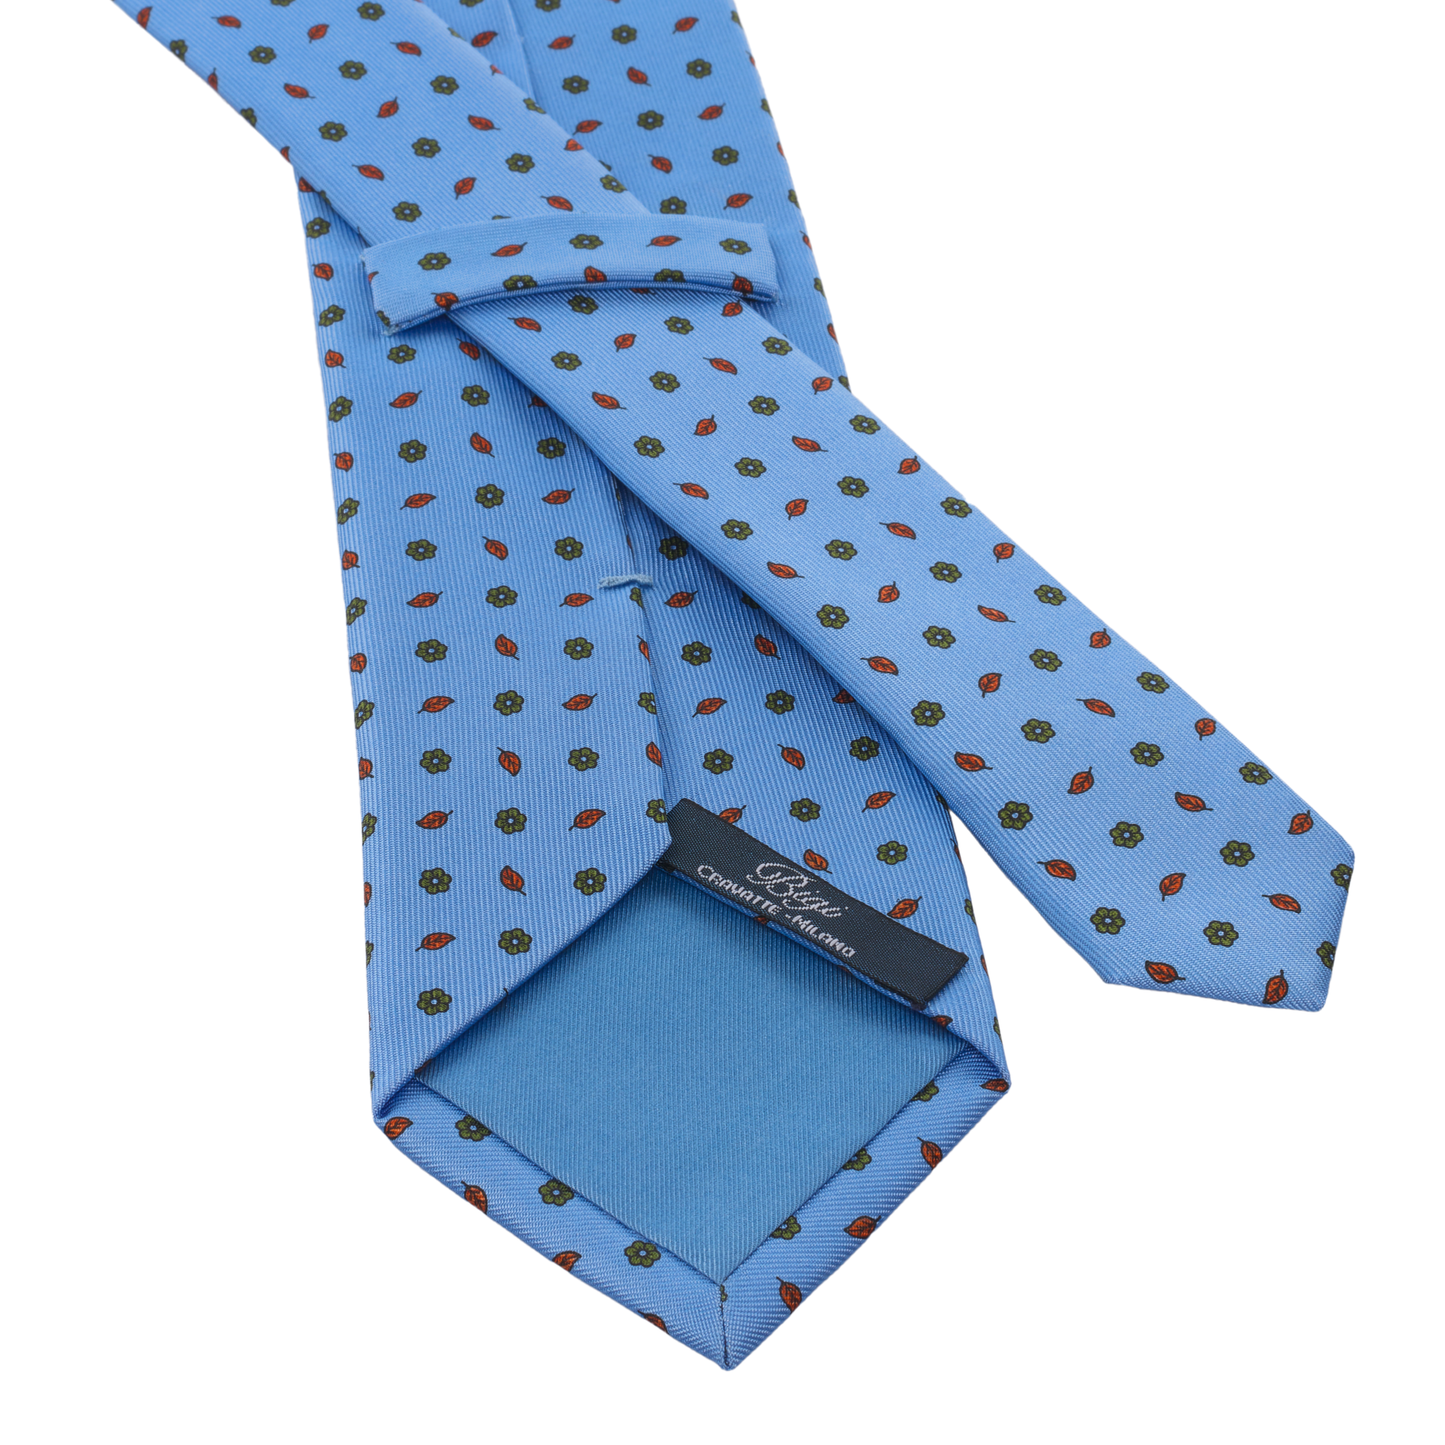 Printed Blue Tie with Leaf Design